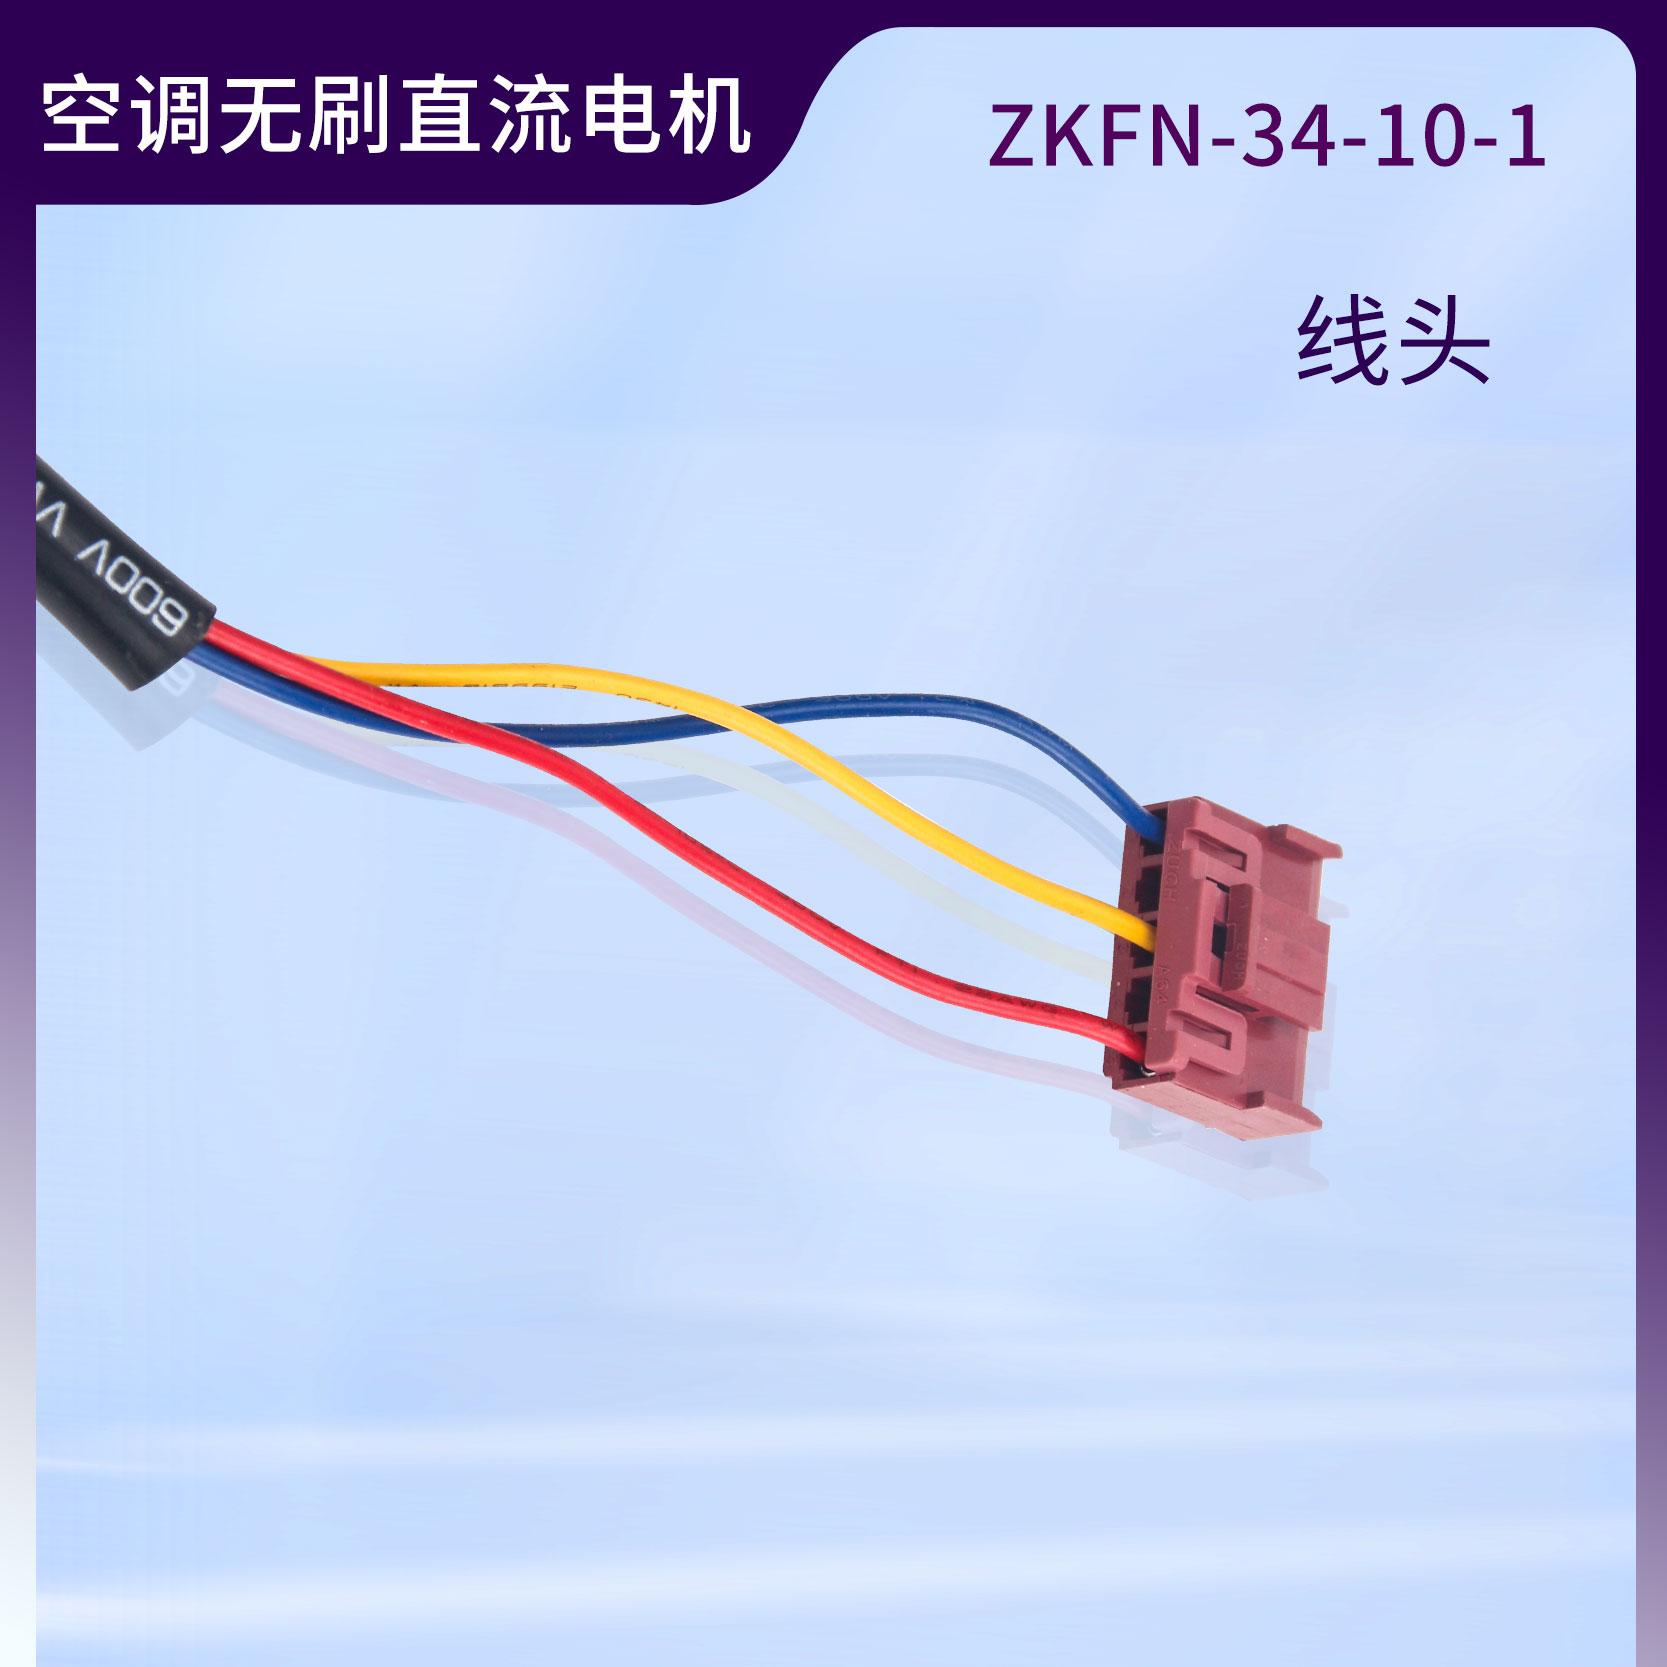 Condenser DC motor ZKFN-34-10-1 ZKFN-40-8-1 for air conditioner or heat pump outdoor unit 6